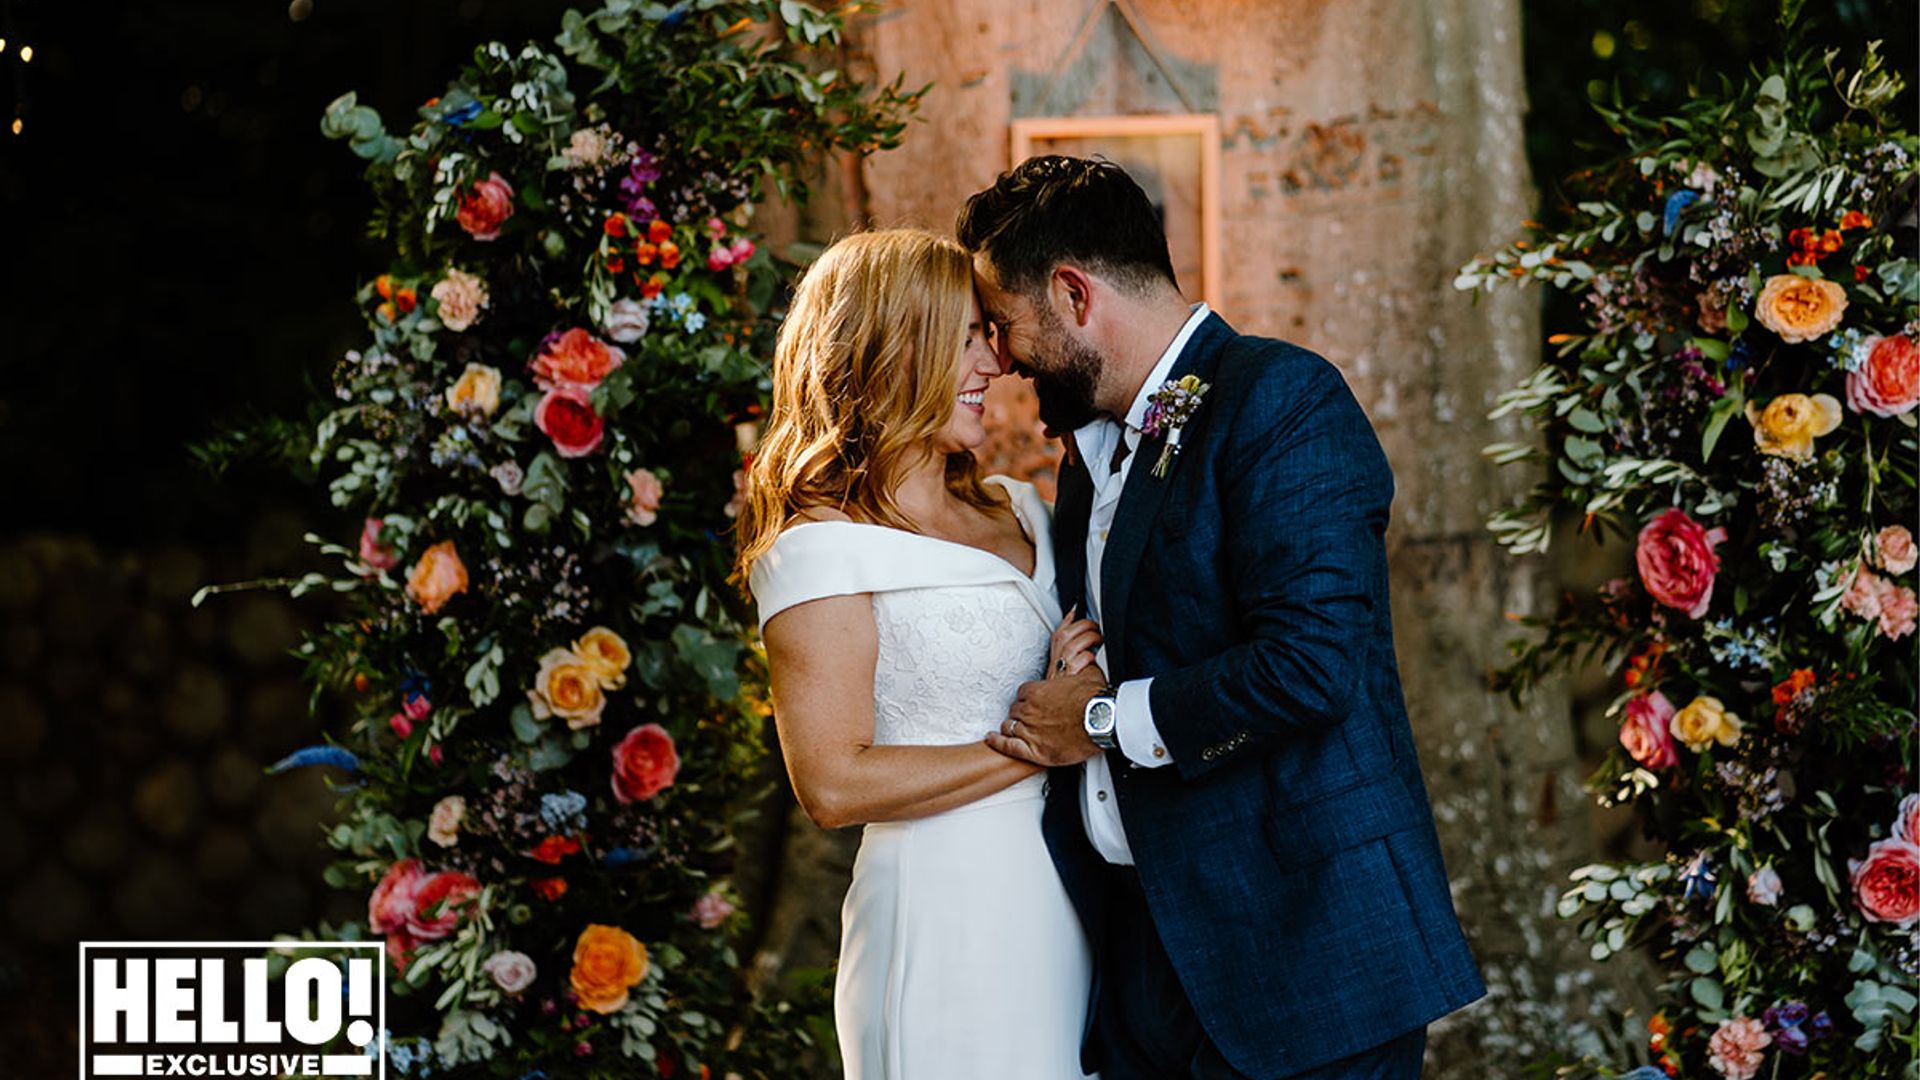 Sky News presenter Sarah-Jane Mee and Ben Richardson marry in enchanting woodland setting